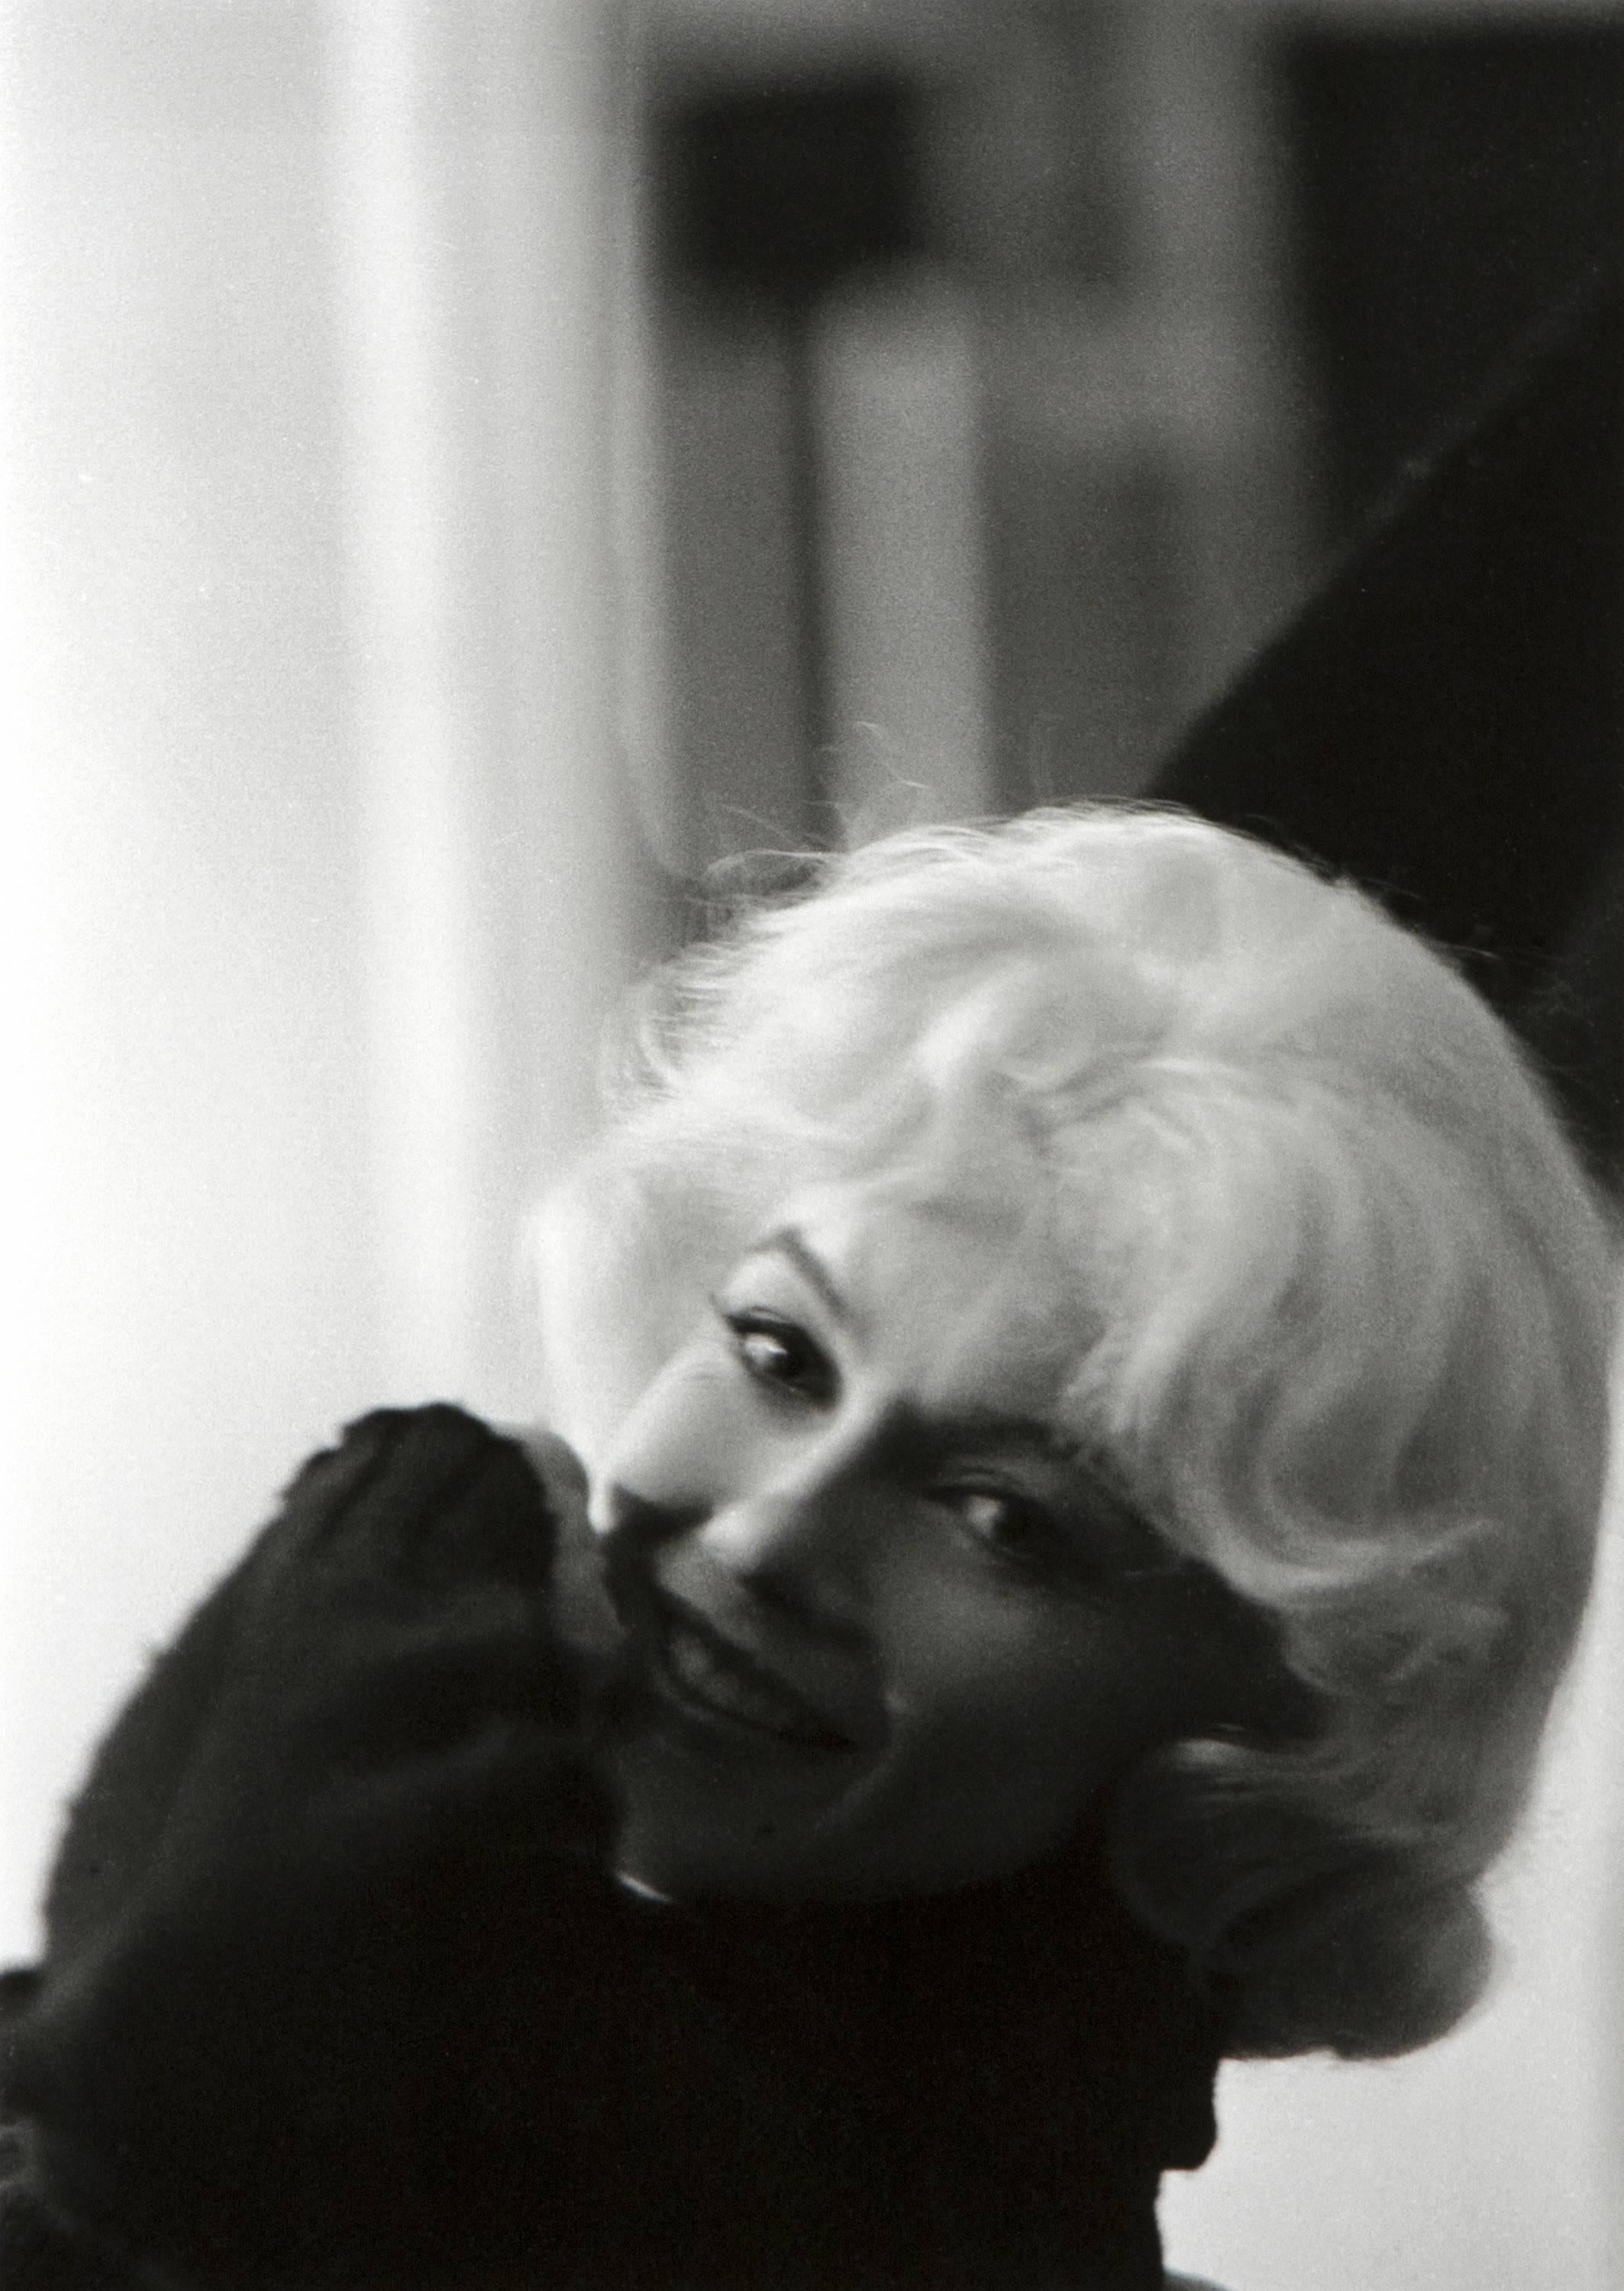 Lawrence Schiller Portrait Photograph – ""Let's Make Love"", Marilyn Monroe